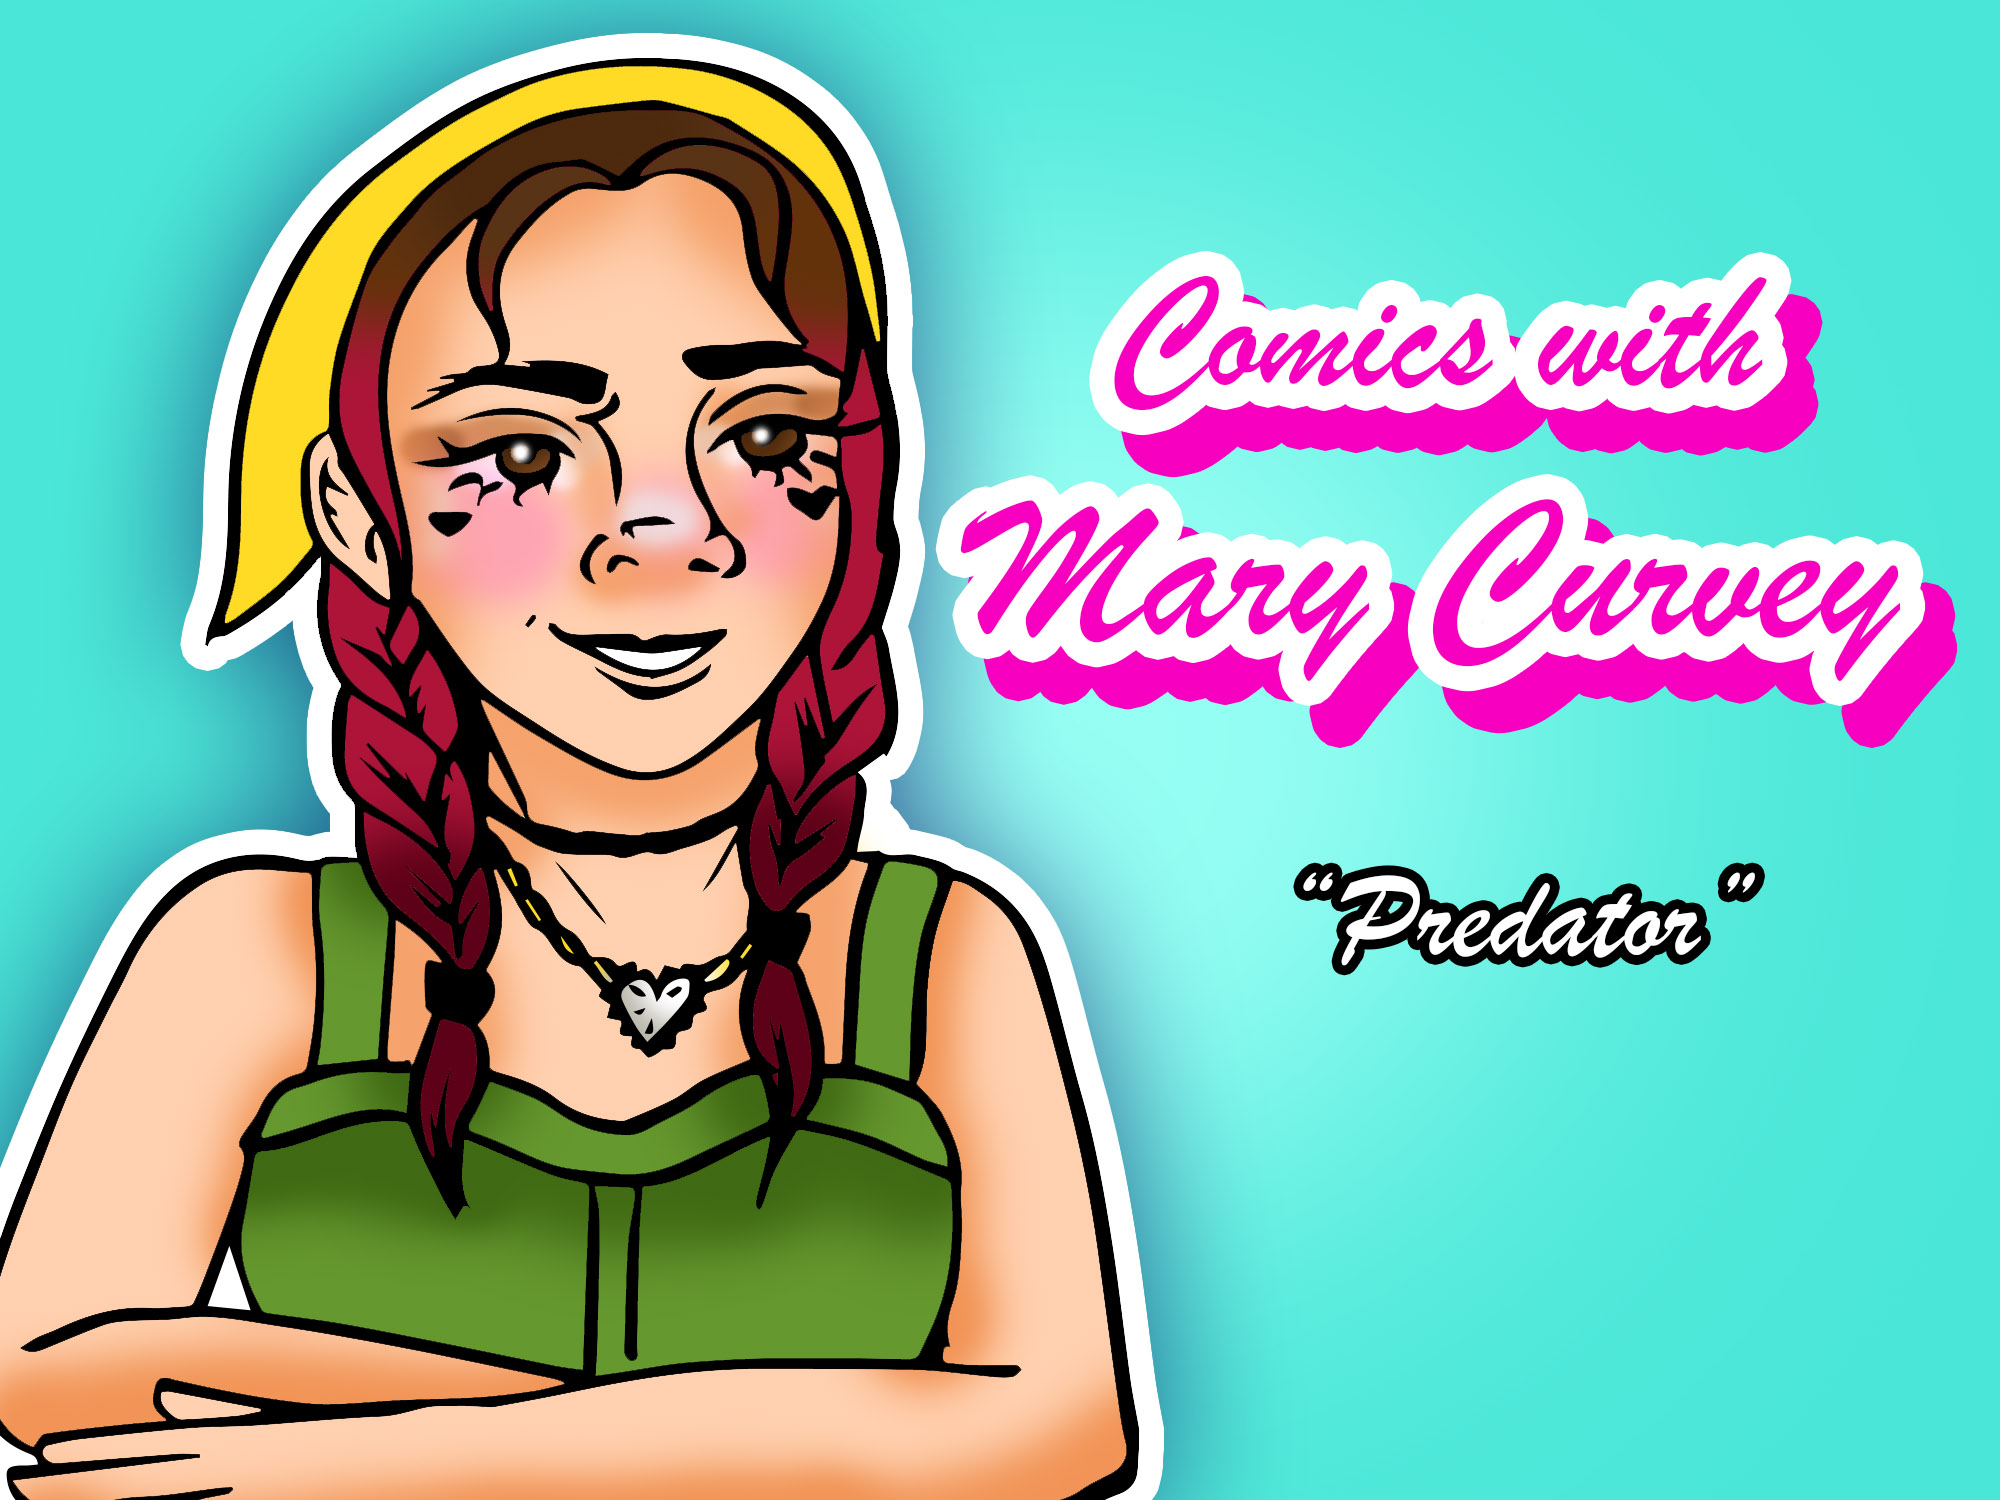 Comics with Mary Curvey